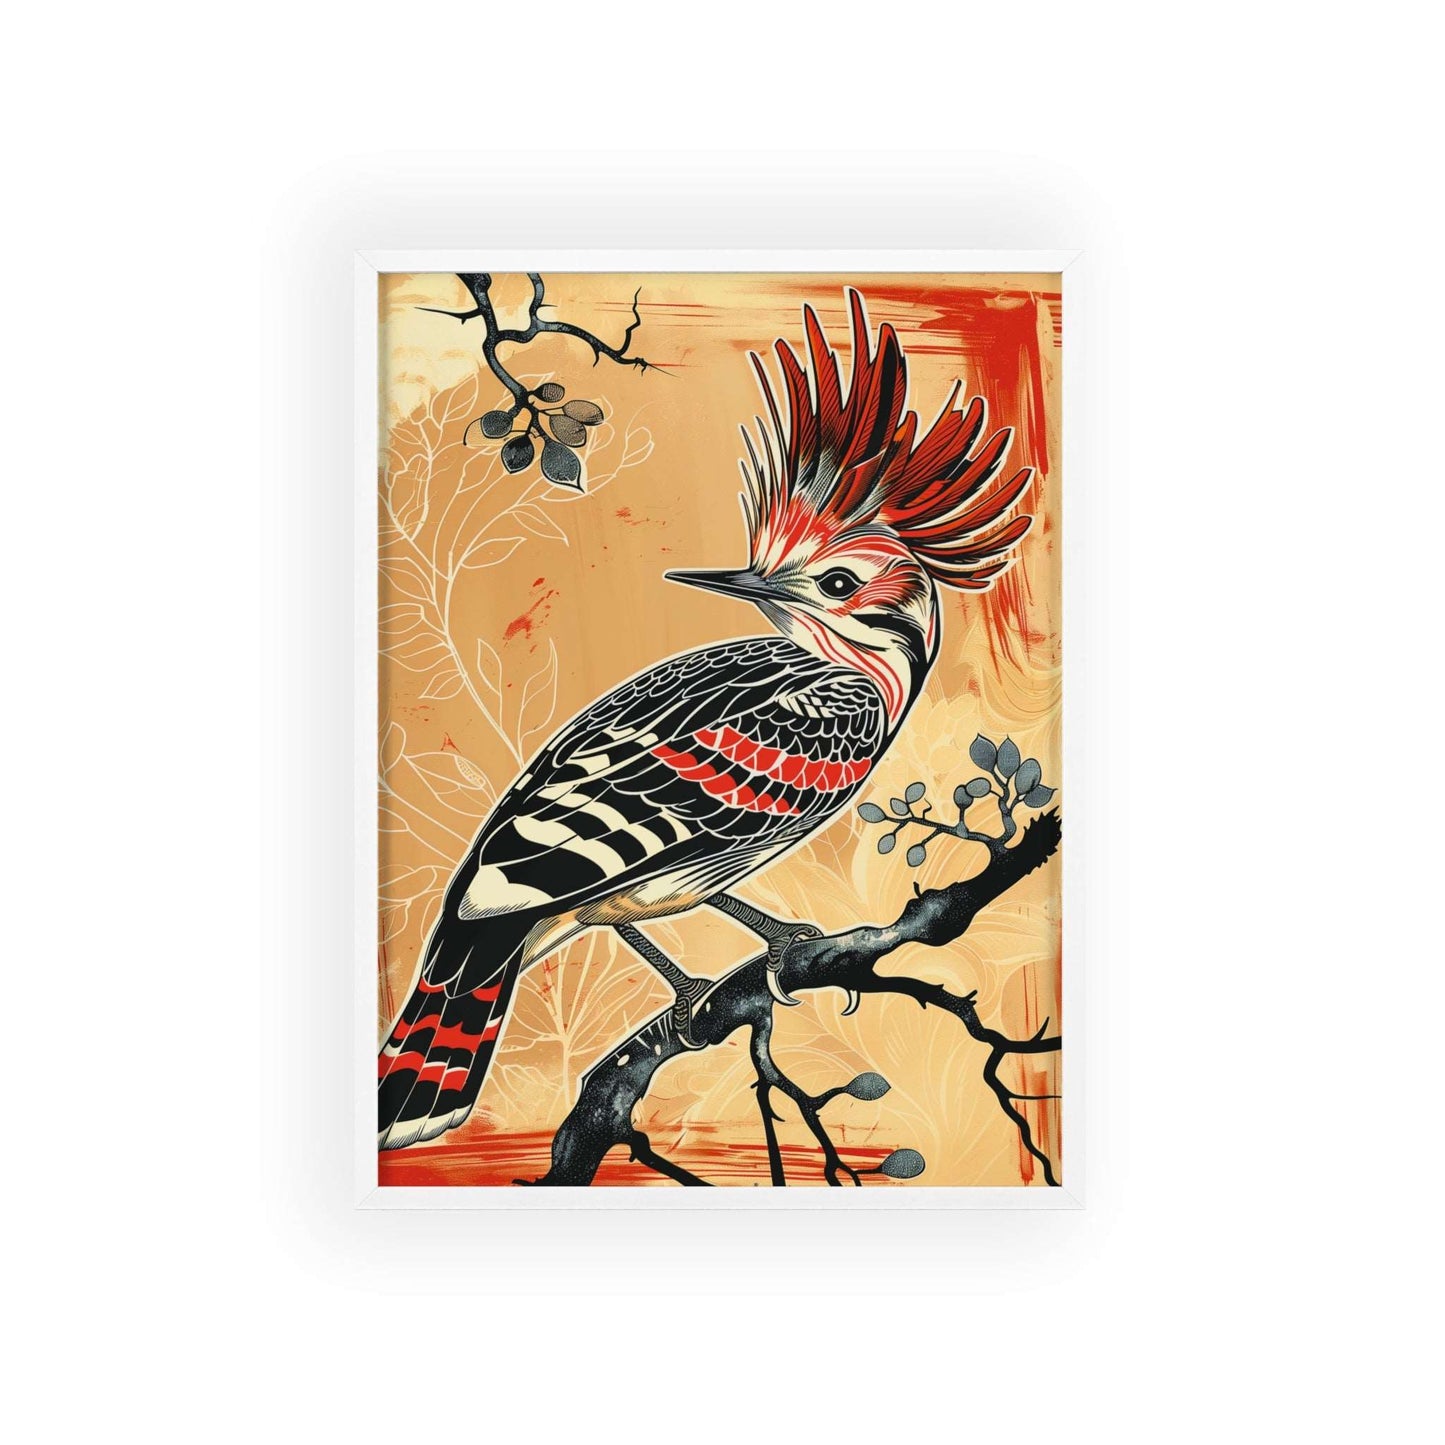 woodpecker poster, bird art, vibrant print, nature decor, wildlife illustration, red crest, birdwatching, wall art, decorative background, nature lovers